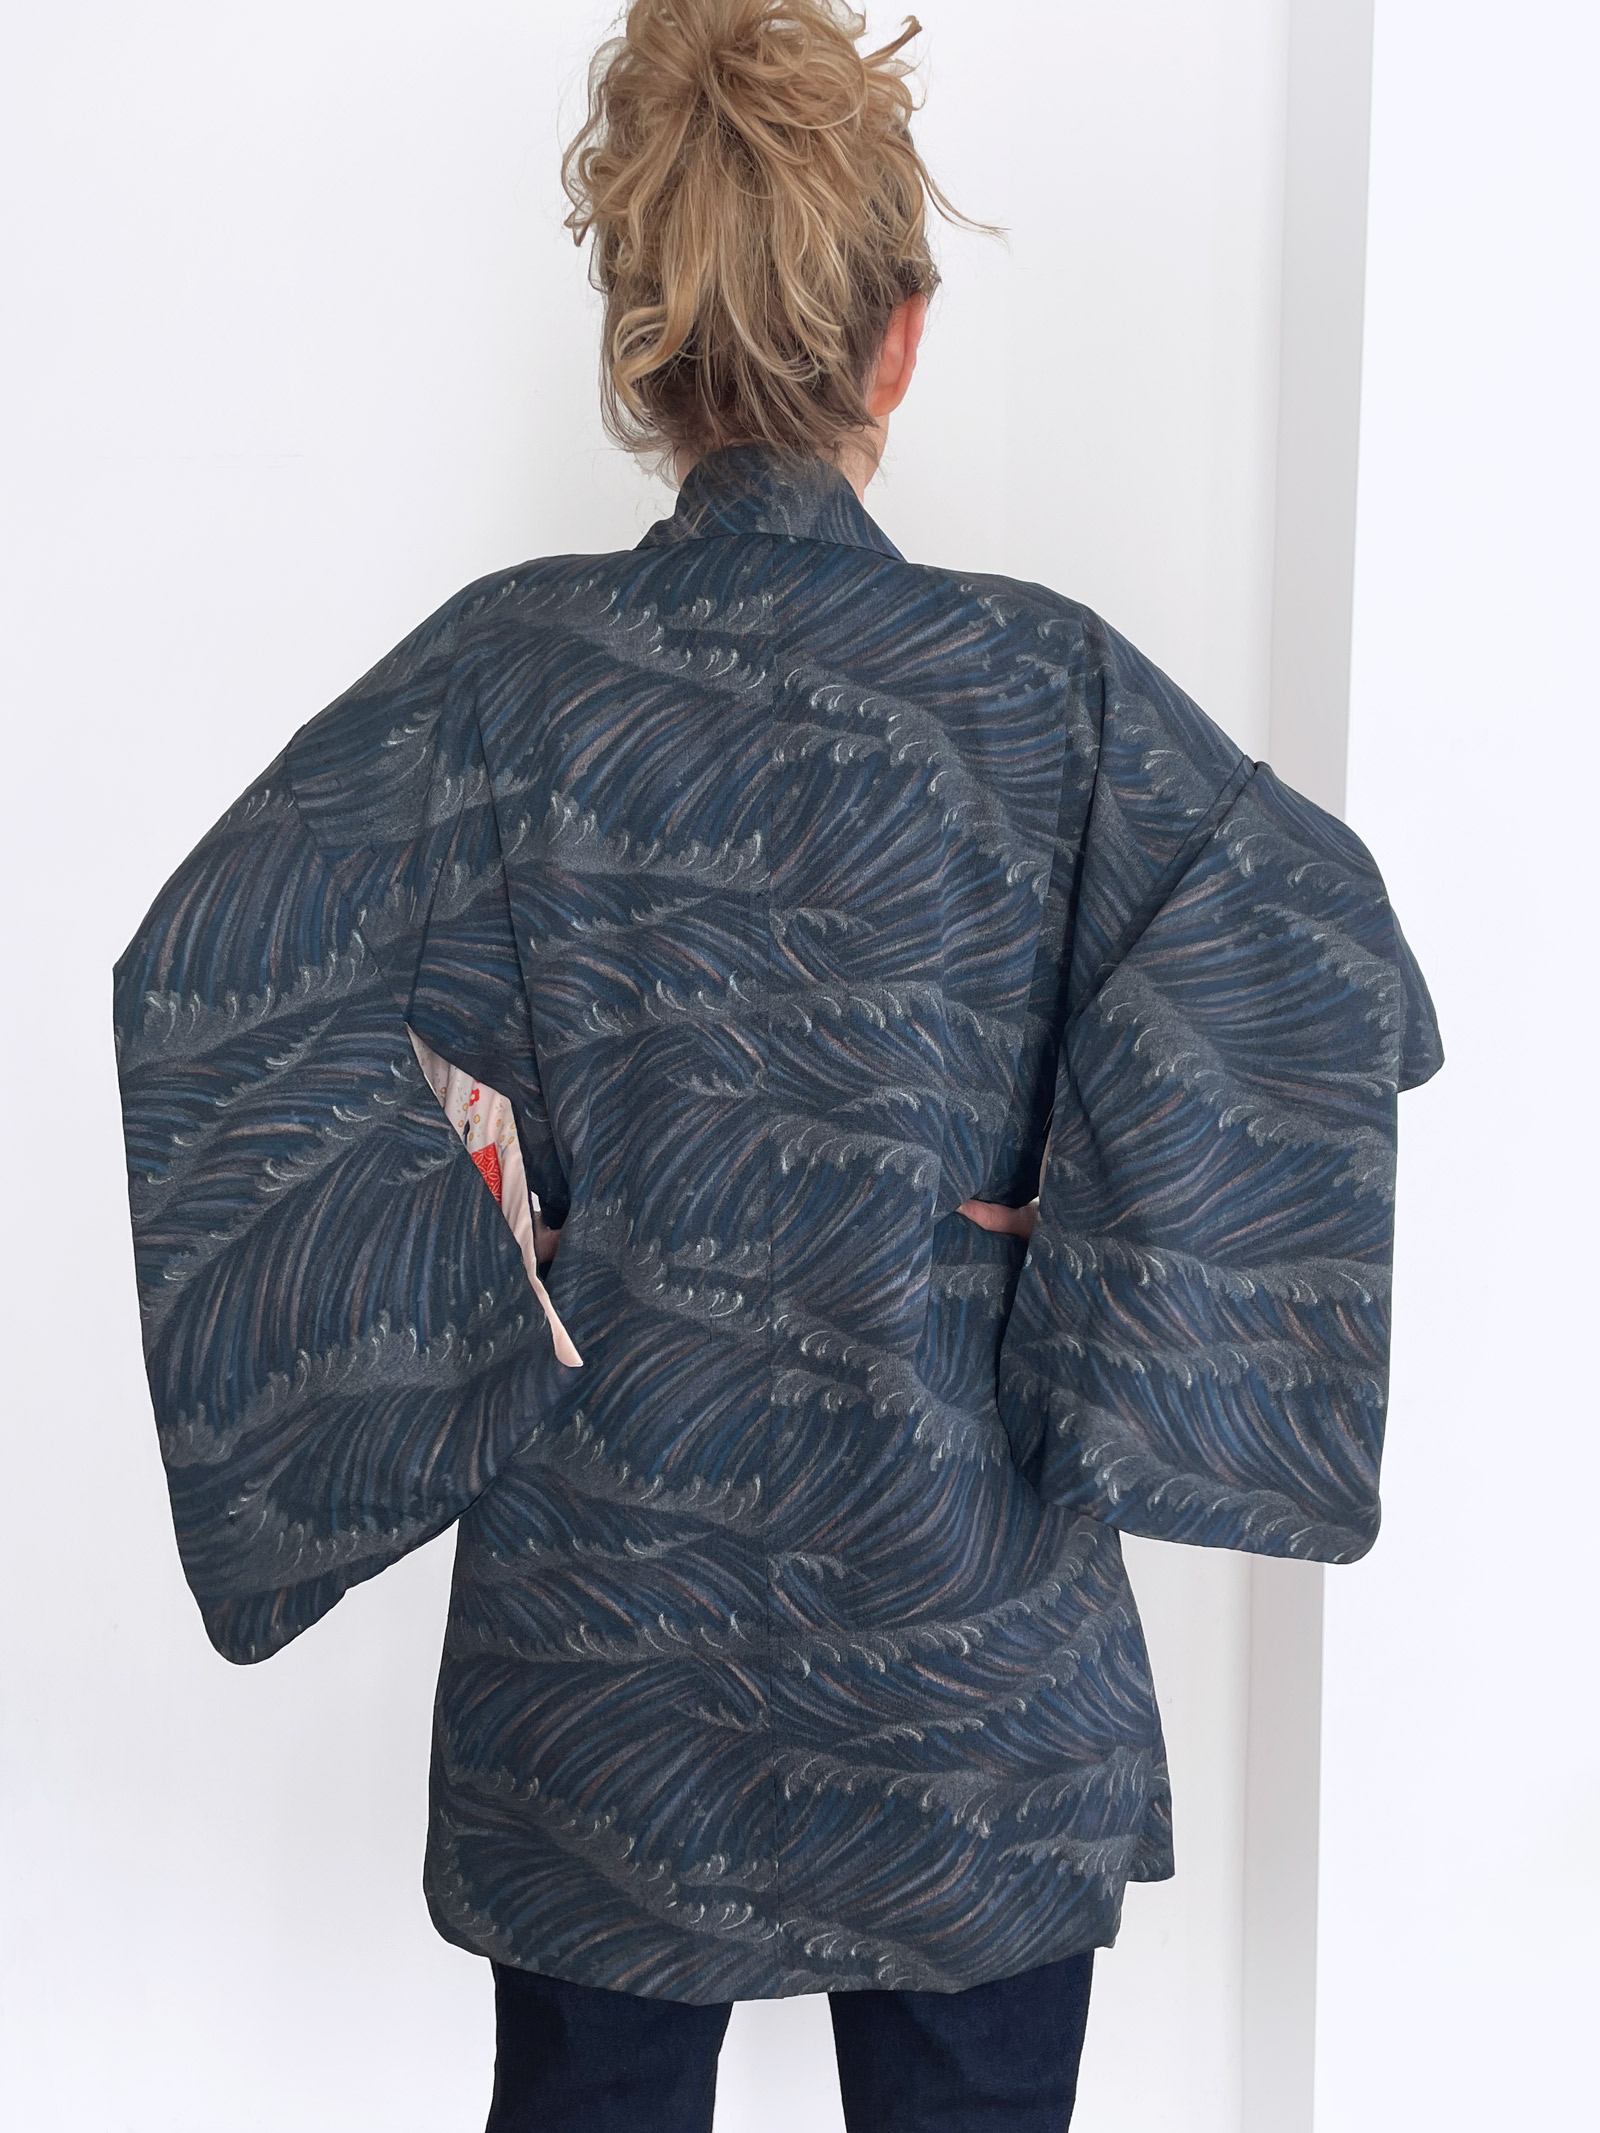 Nagisa – Kimono jacket with blue gray waves design